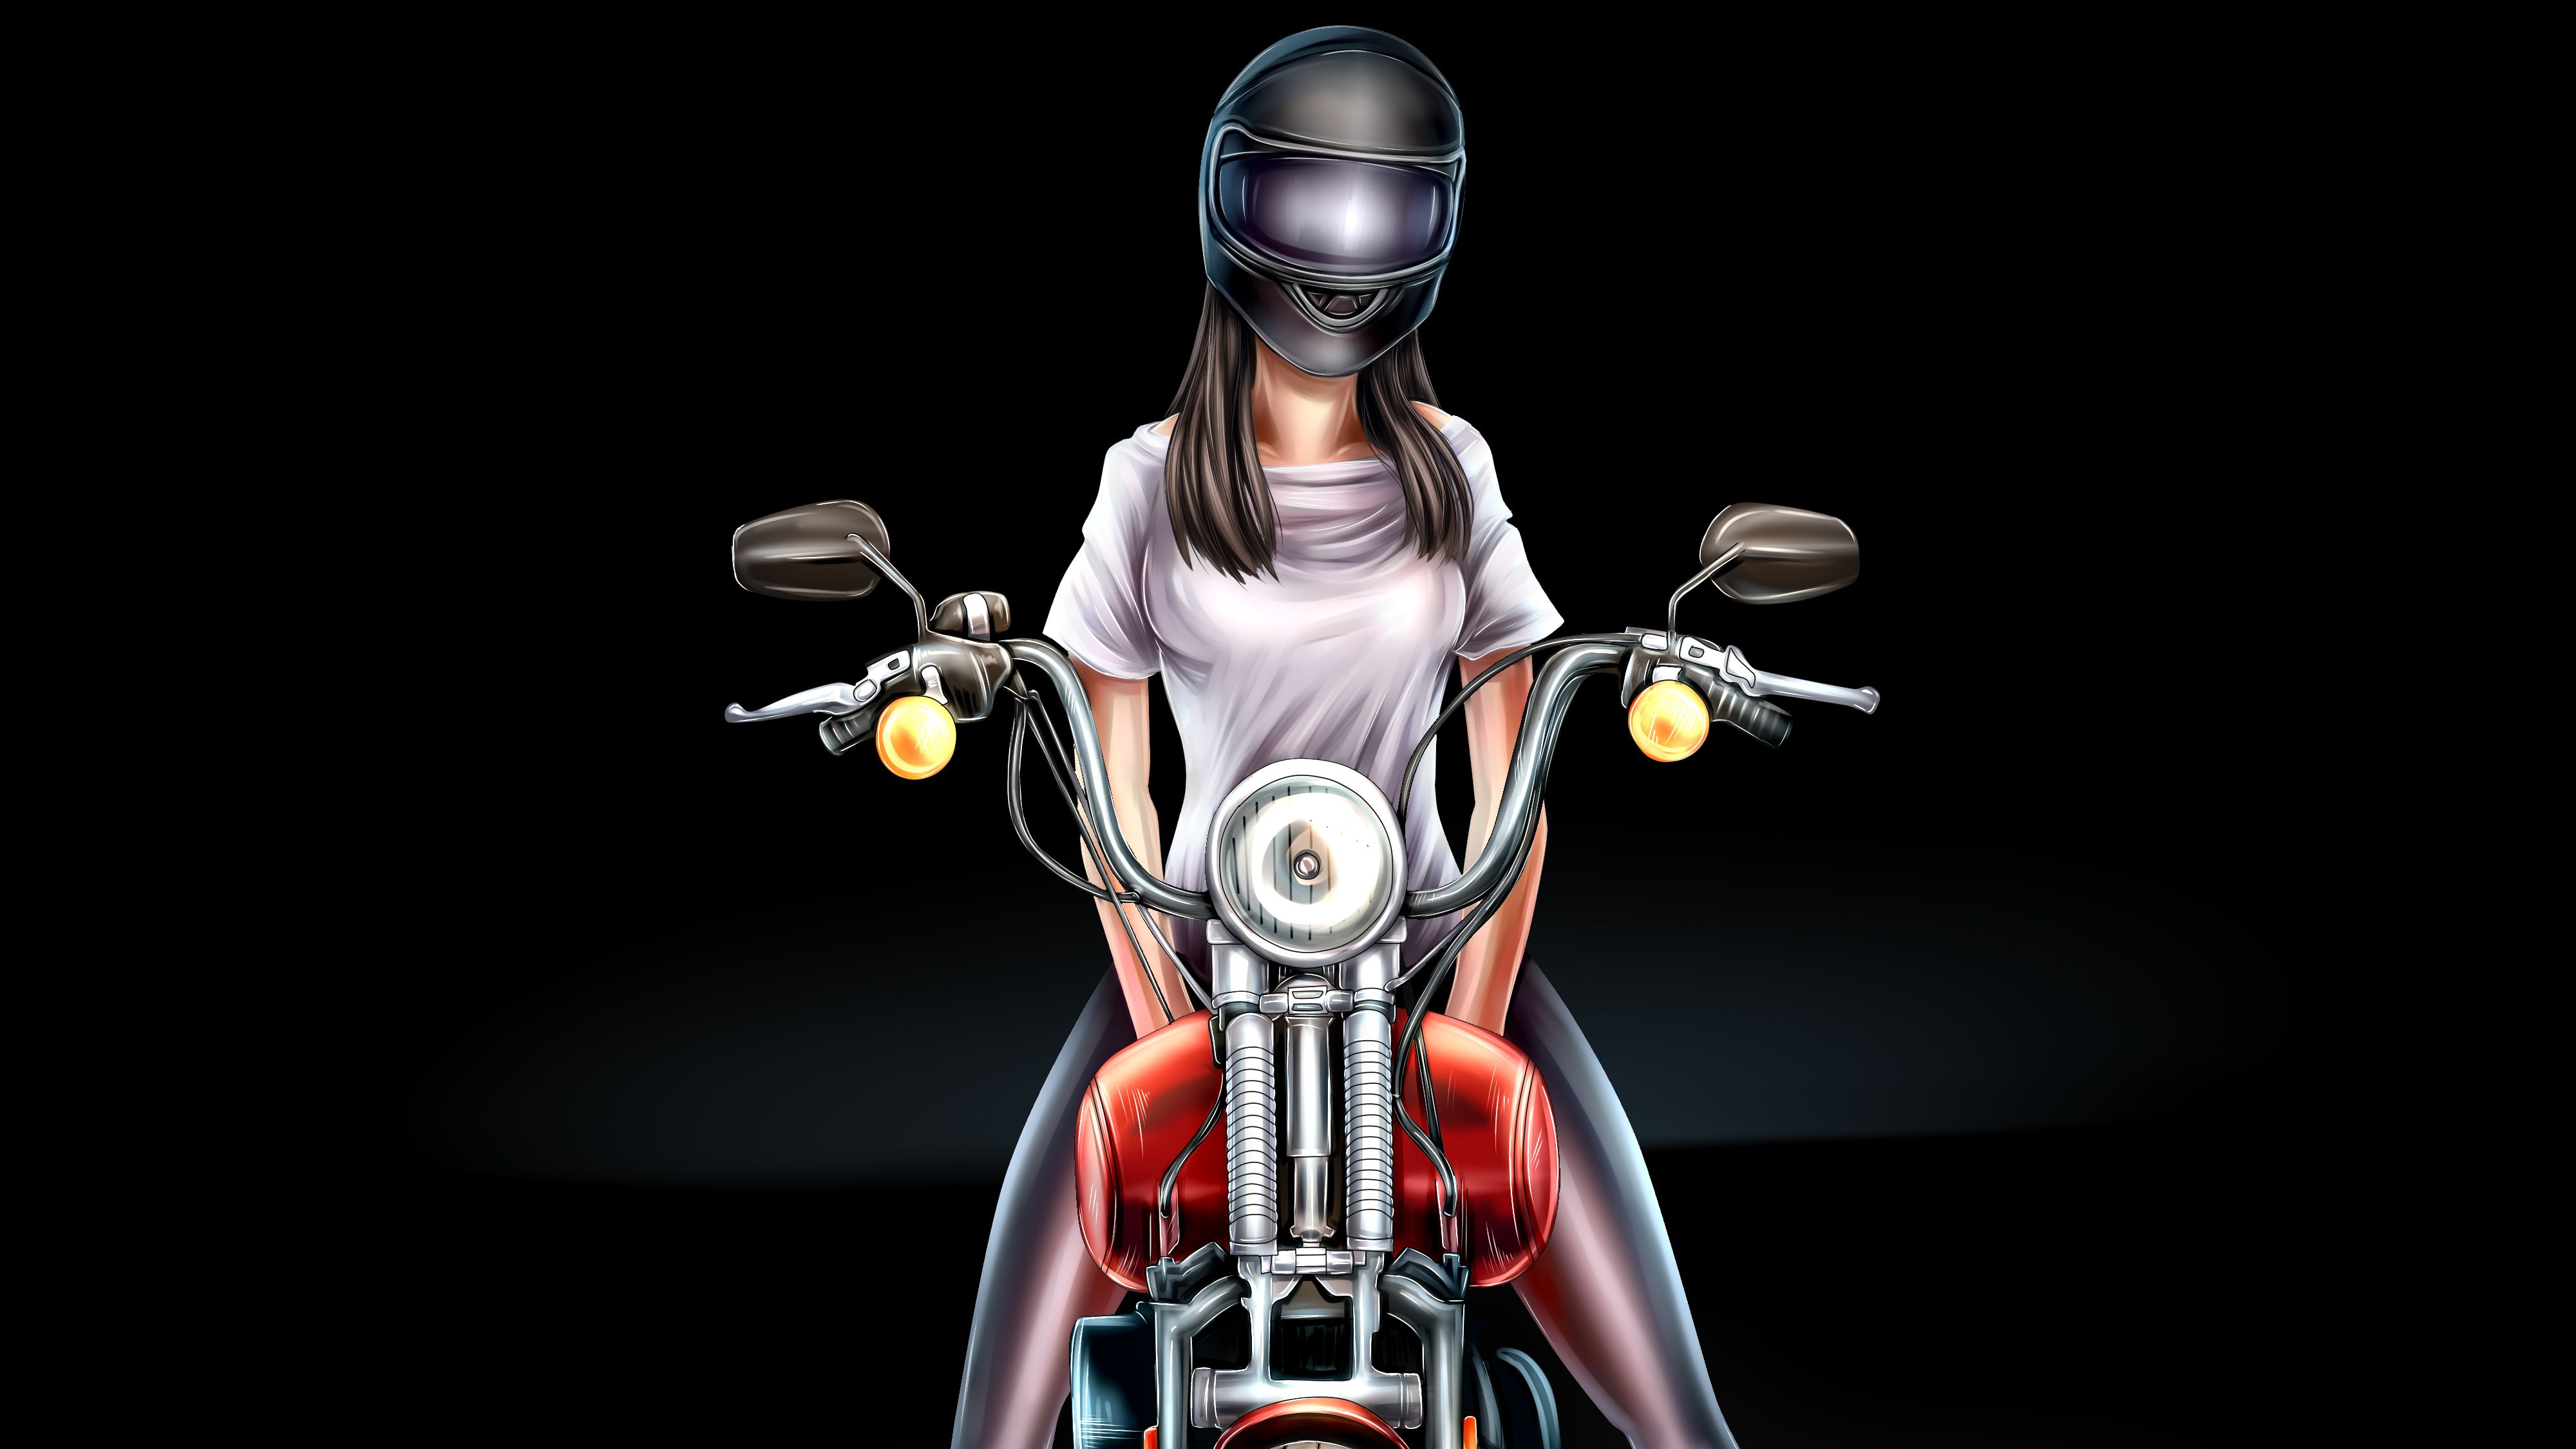 Biker Girl Digital Art 4k, HD Artist, 4k Wallpaper, Image, Background, Photo and Picture